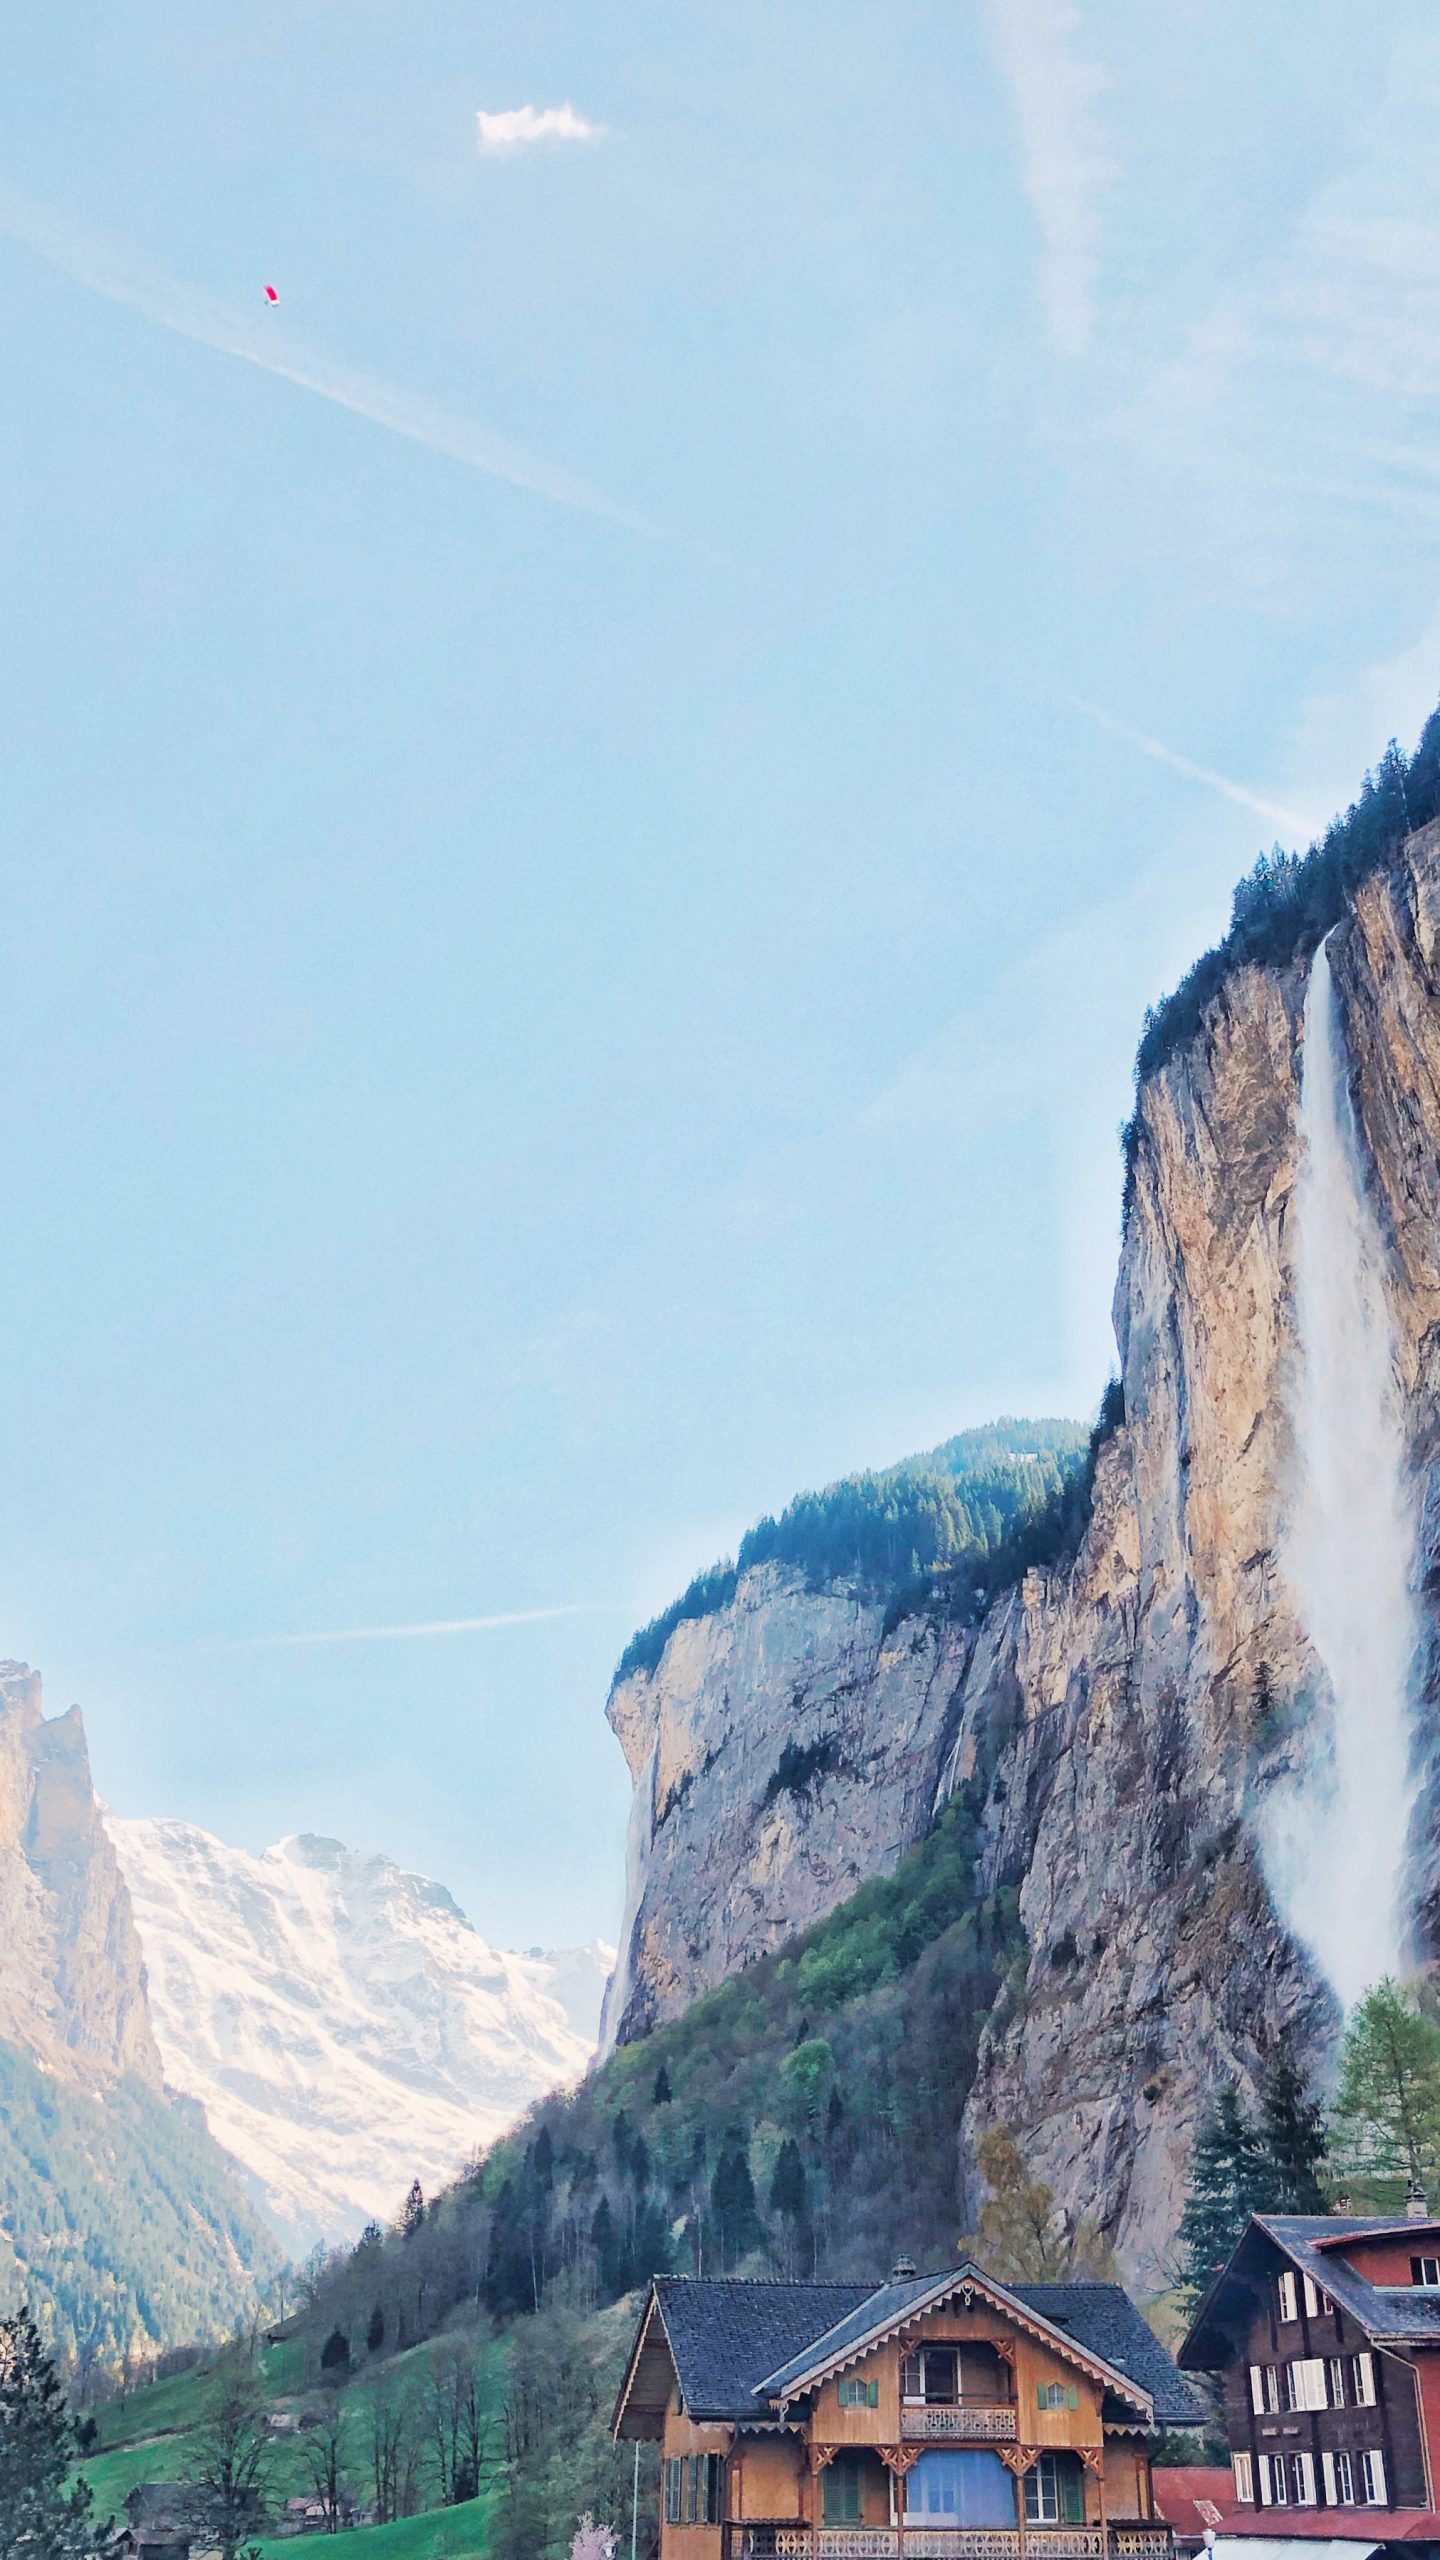 Staubbach Falls and the Swiss Alps in Lauterbrunnen, Switzerland.